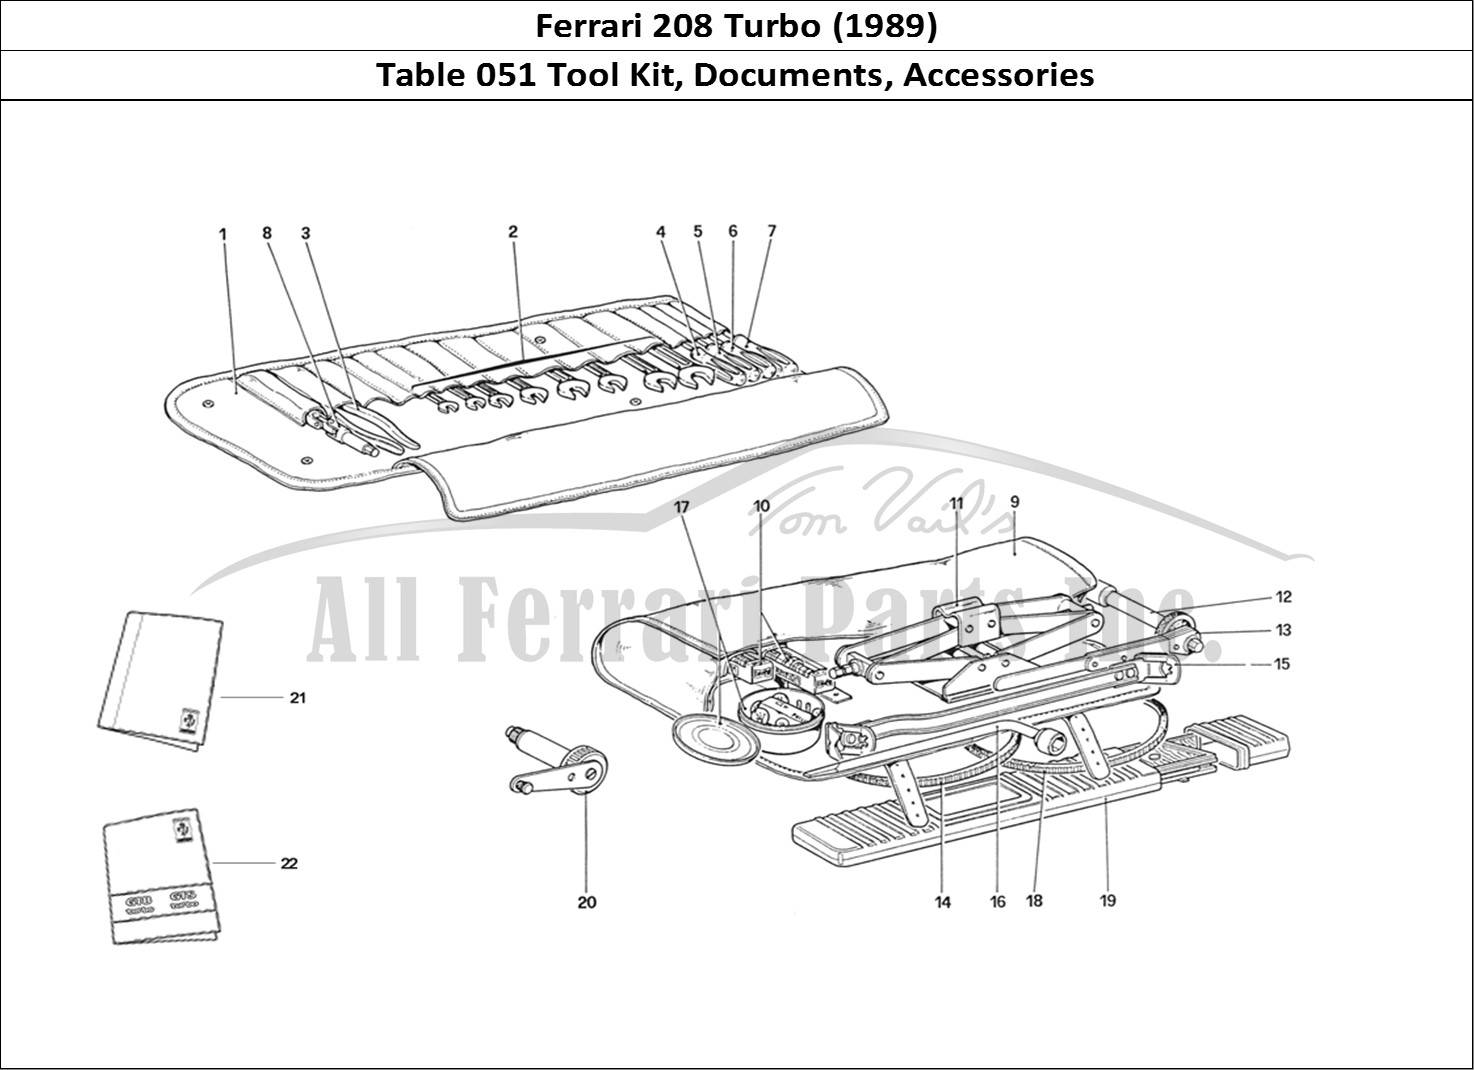 Ferrari Parts Ferrari 208 Turbo (1989) Page 051 Tool Kit - Documents & Ac